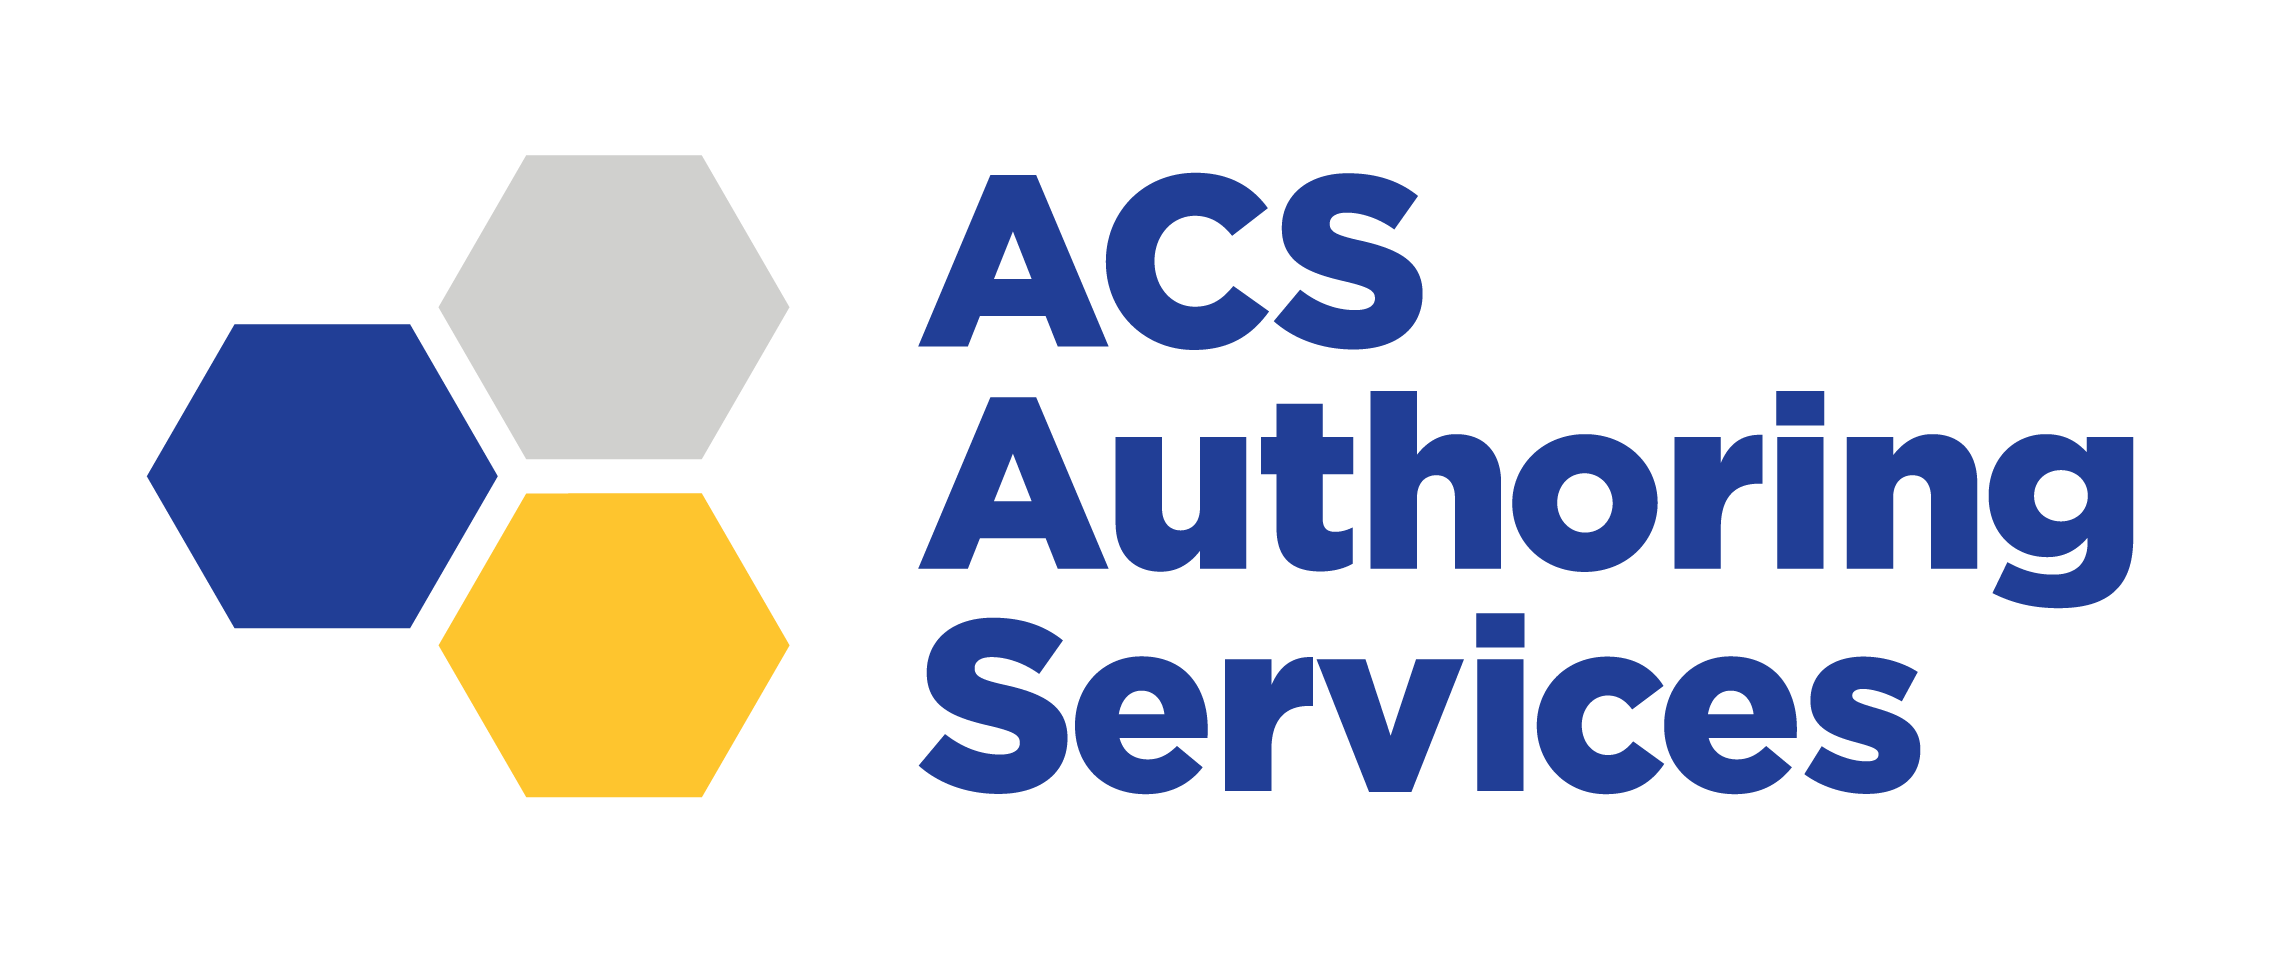 ACS Authoring Servies